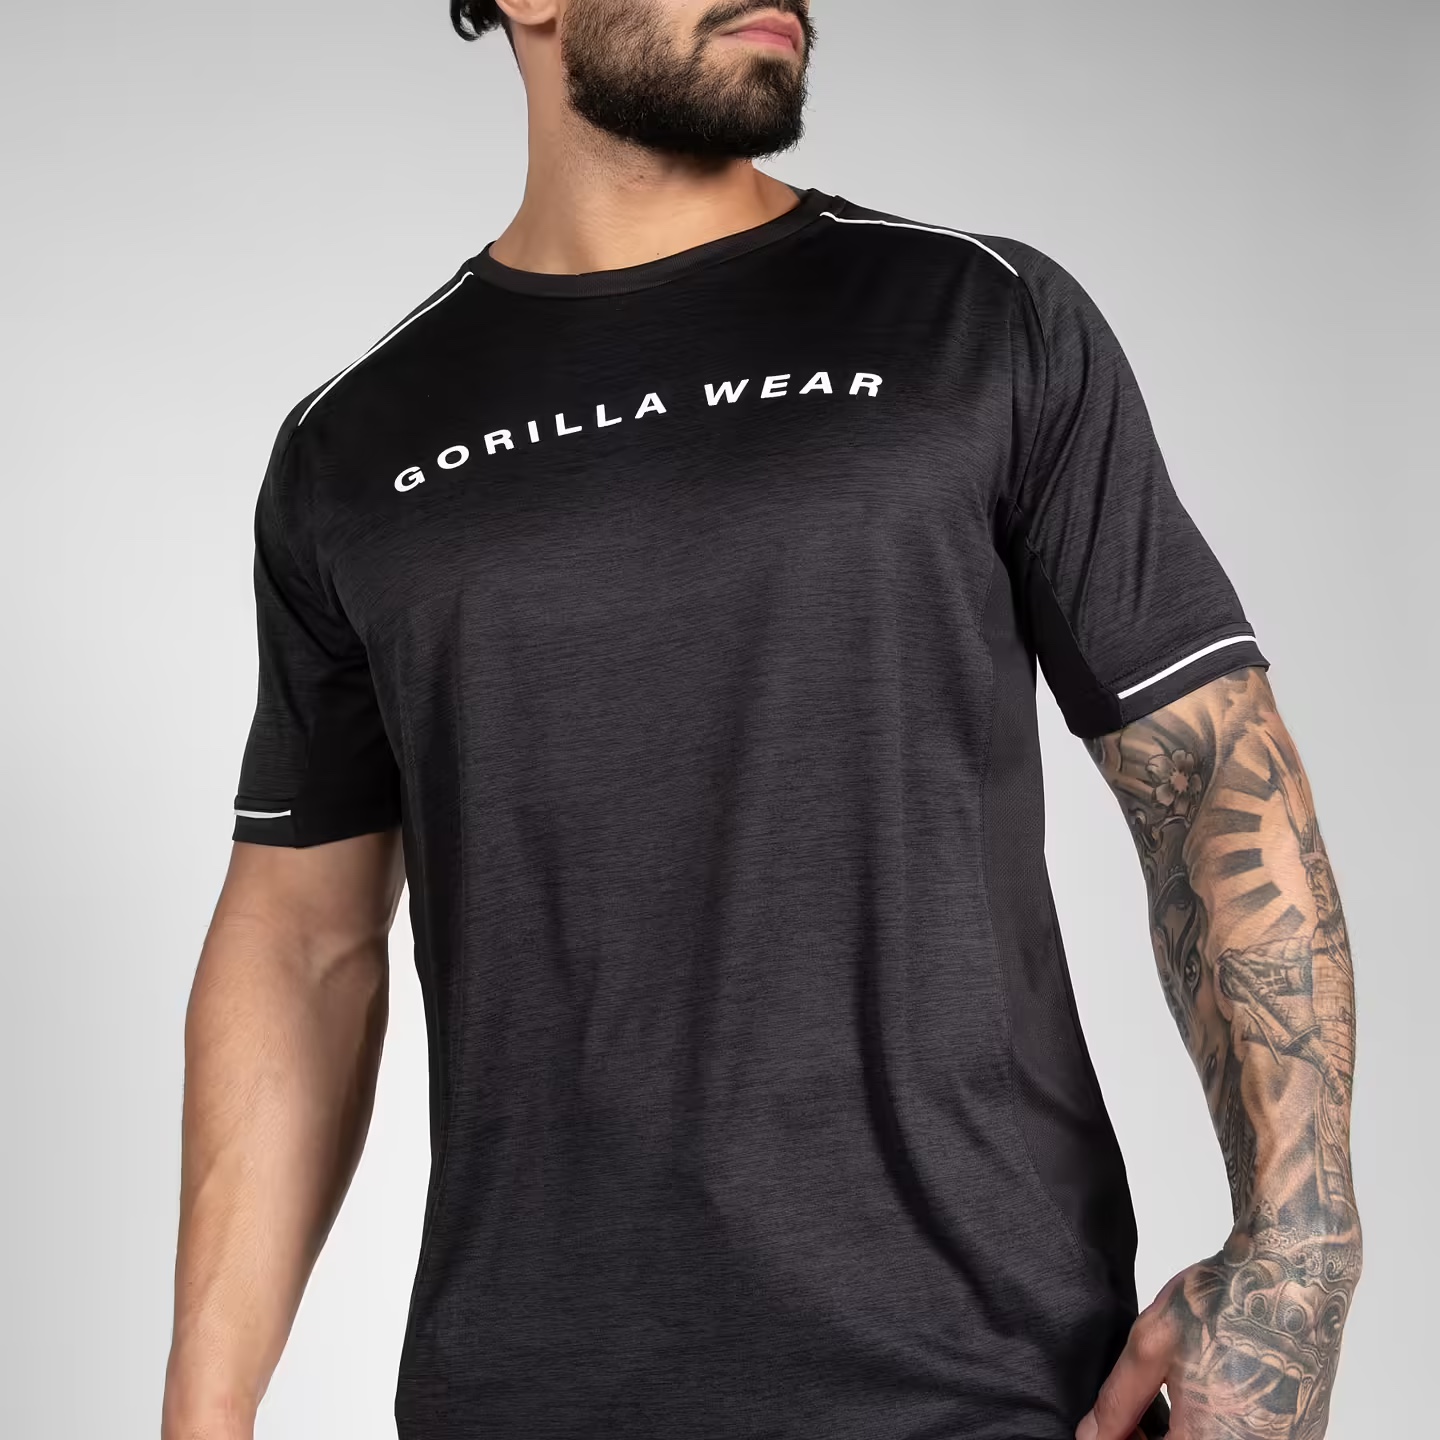 Gorilla Wear - Fremont  T-Shirt black/white